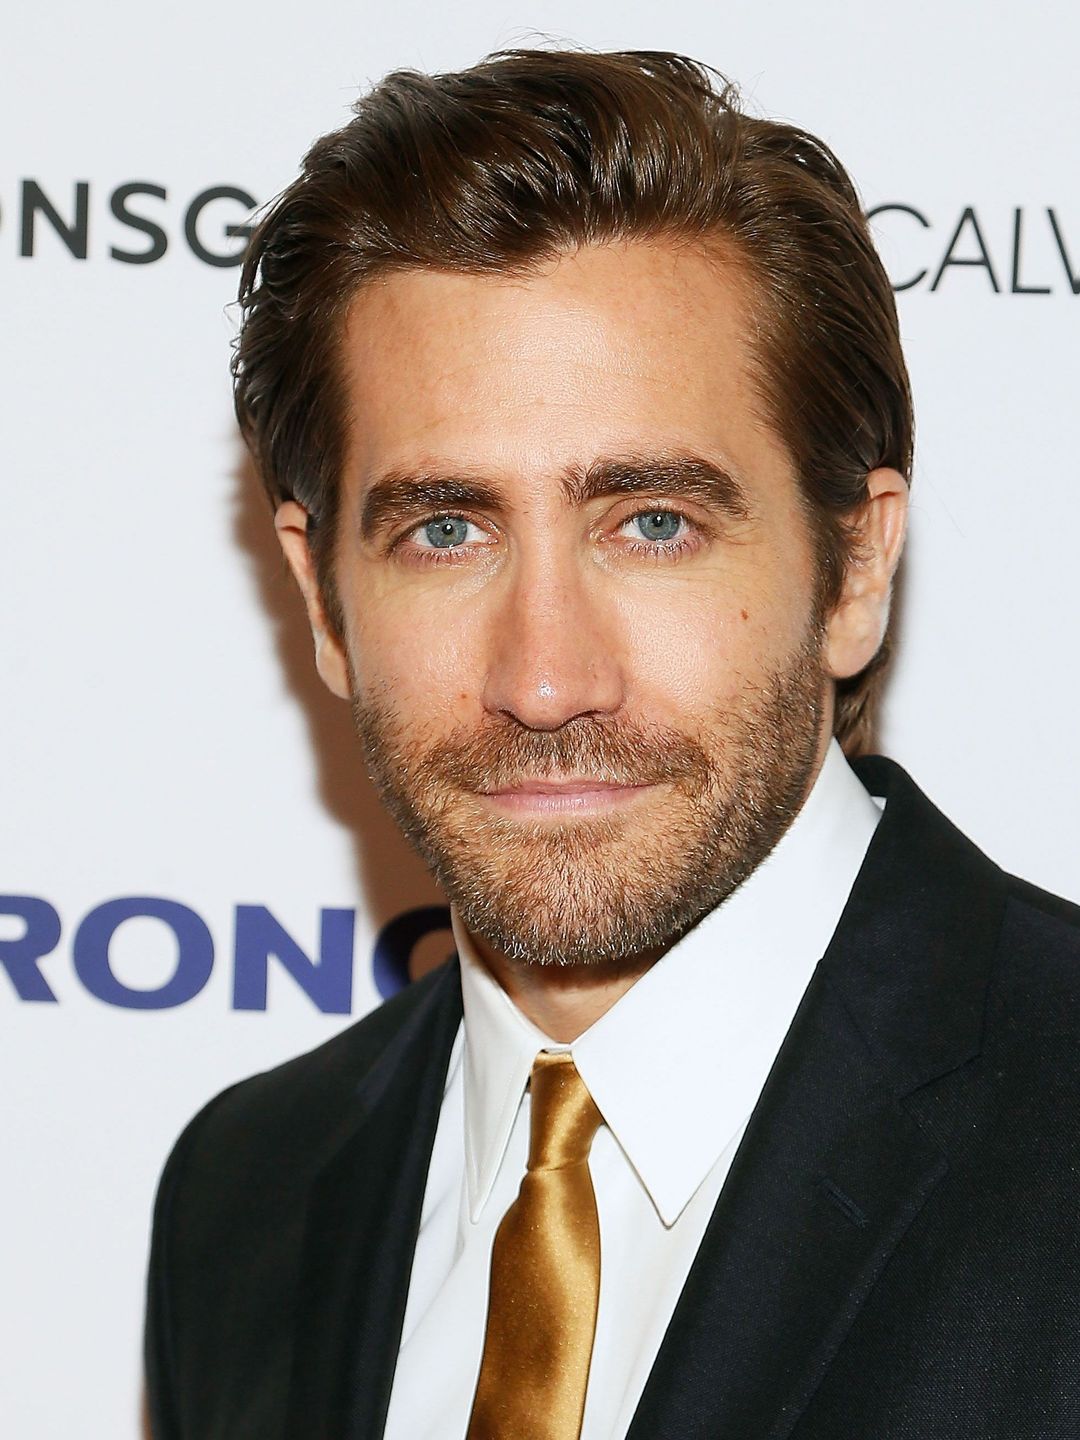 Jake Gyllenhaal life path